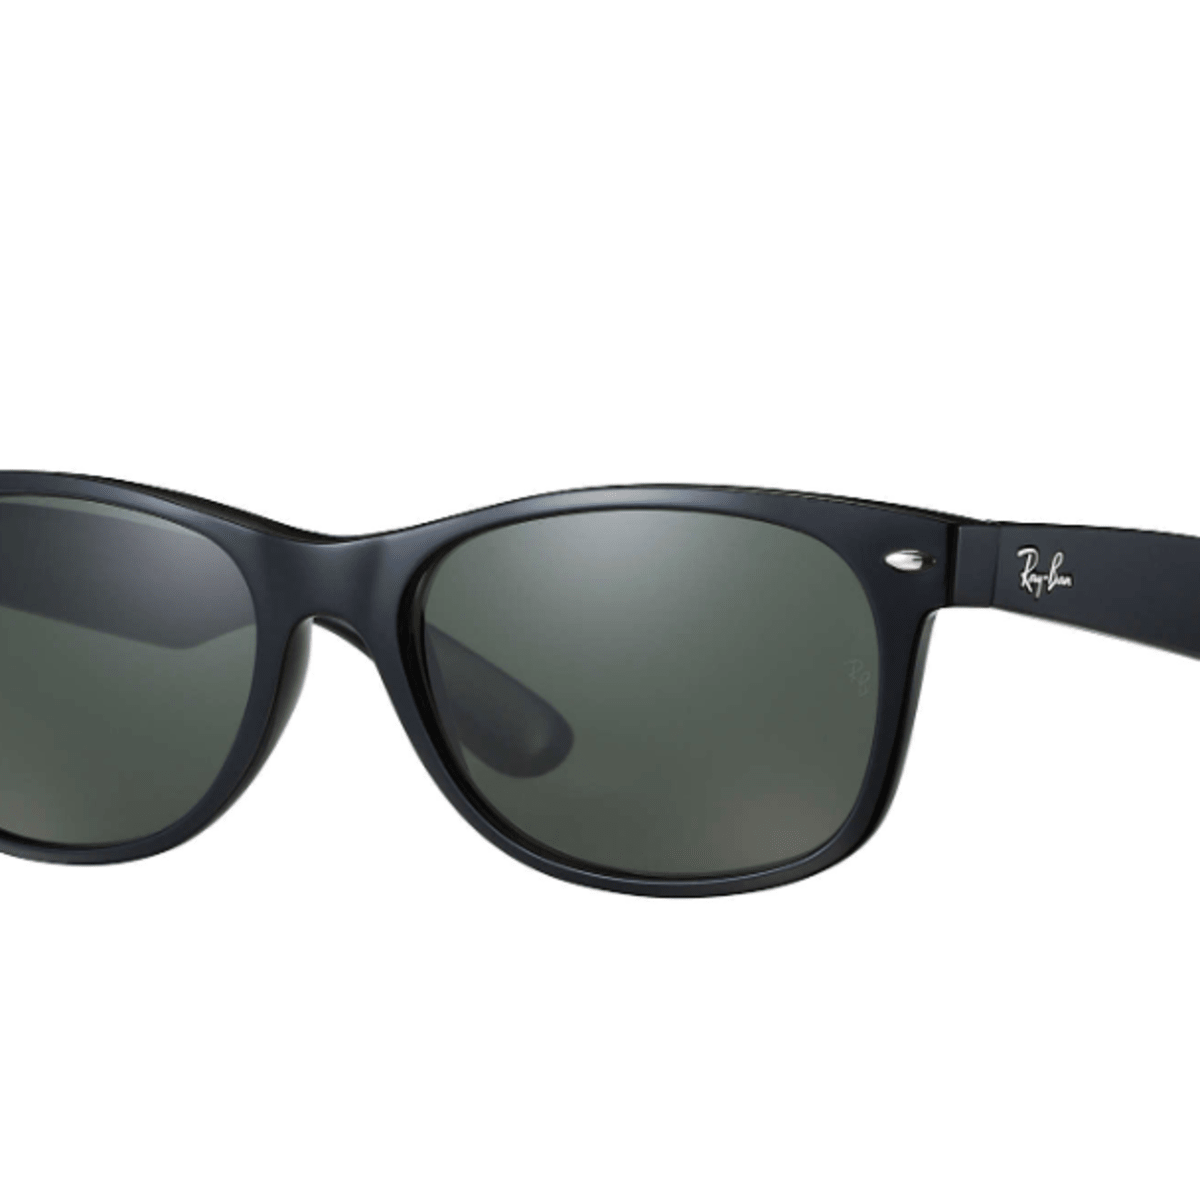 Ray Ban New Wayfarer Polarized Brown 55 mm Sunglasses RB2132 945/57 55-18 -  Đức An Phát